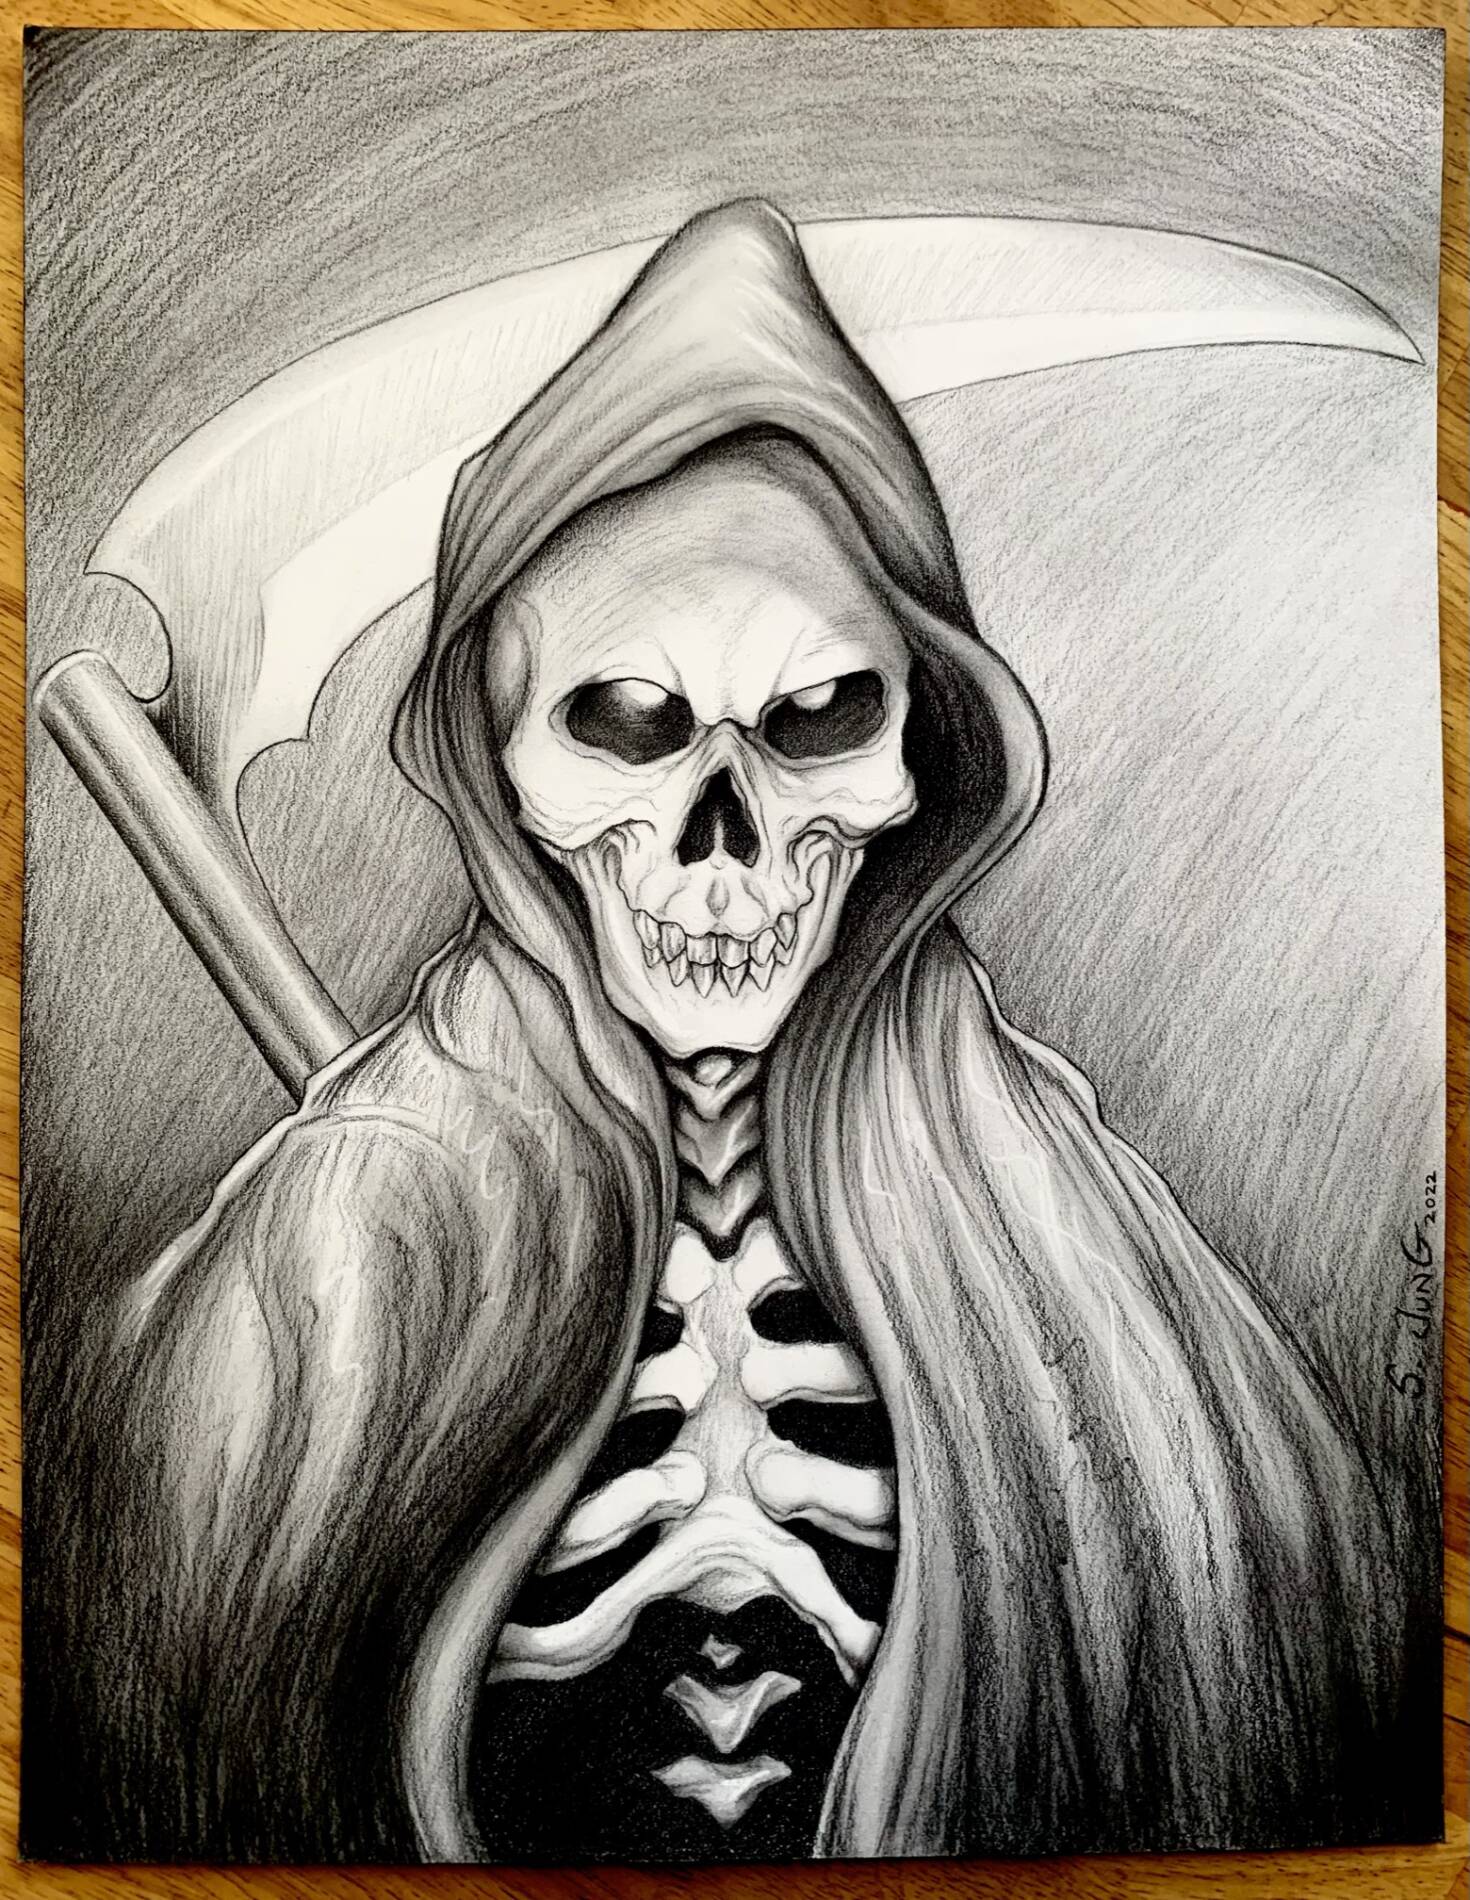 grim reaper with wings drawings in pencil